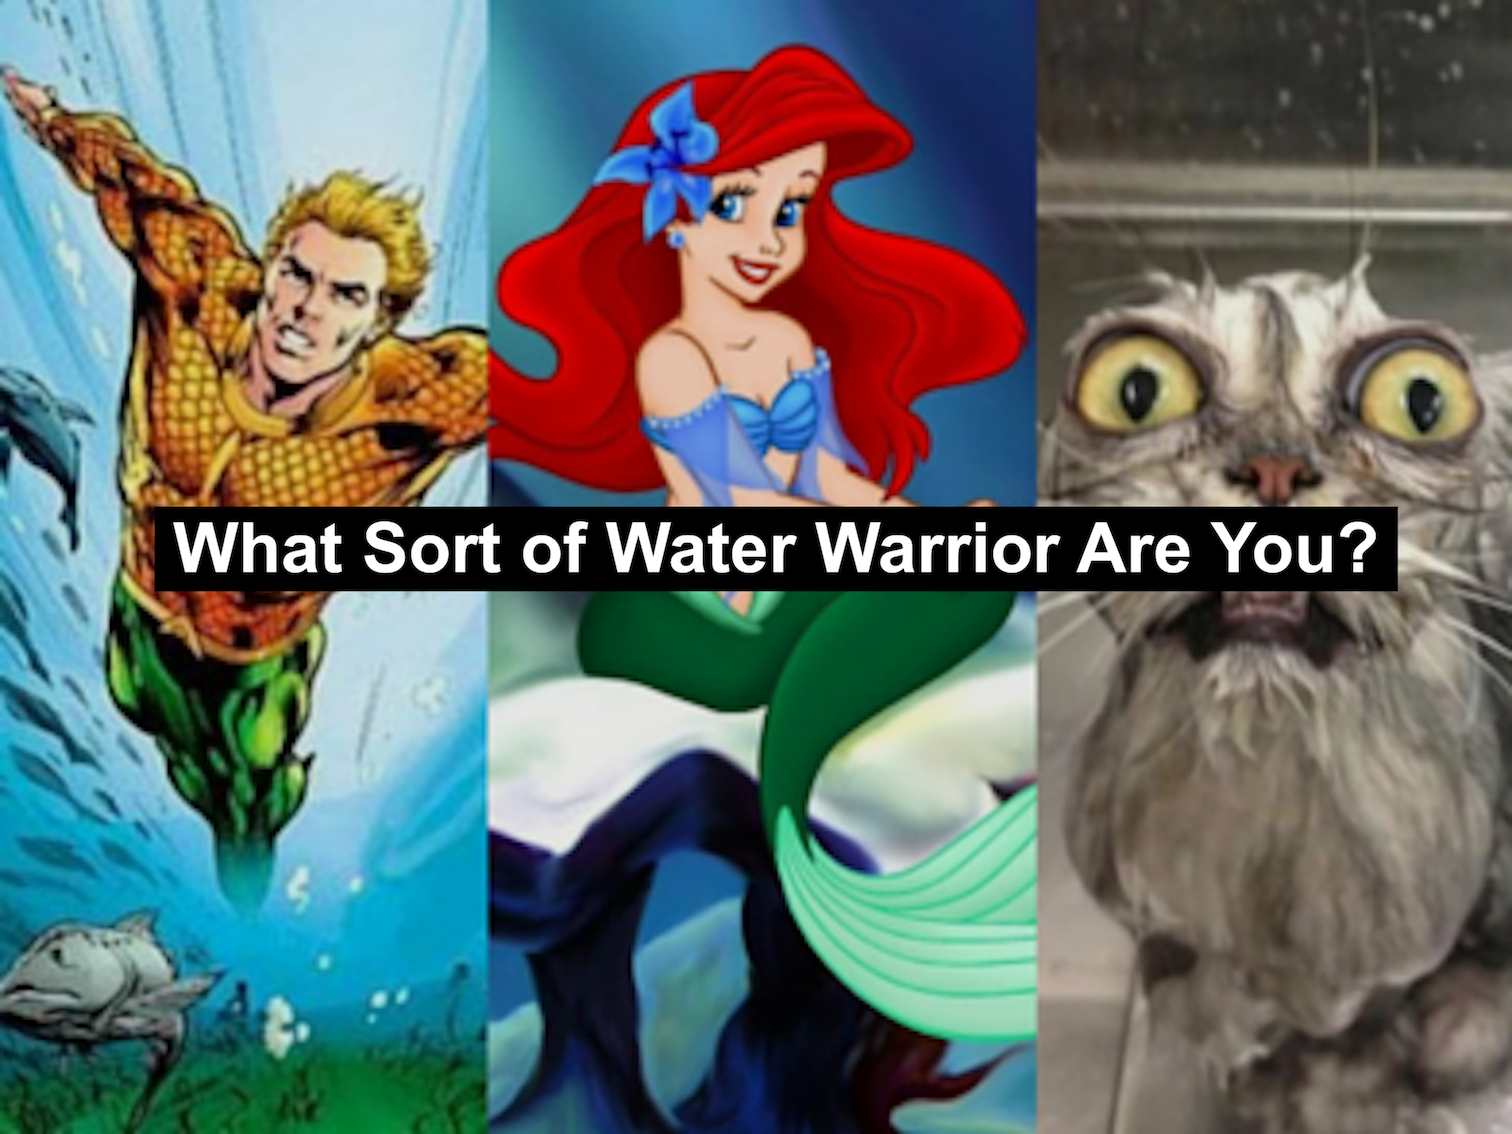 Water quiz